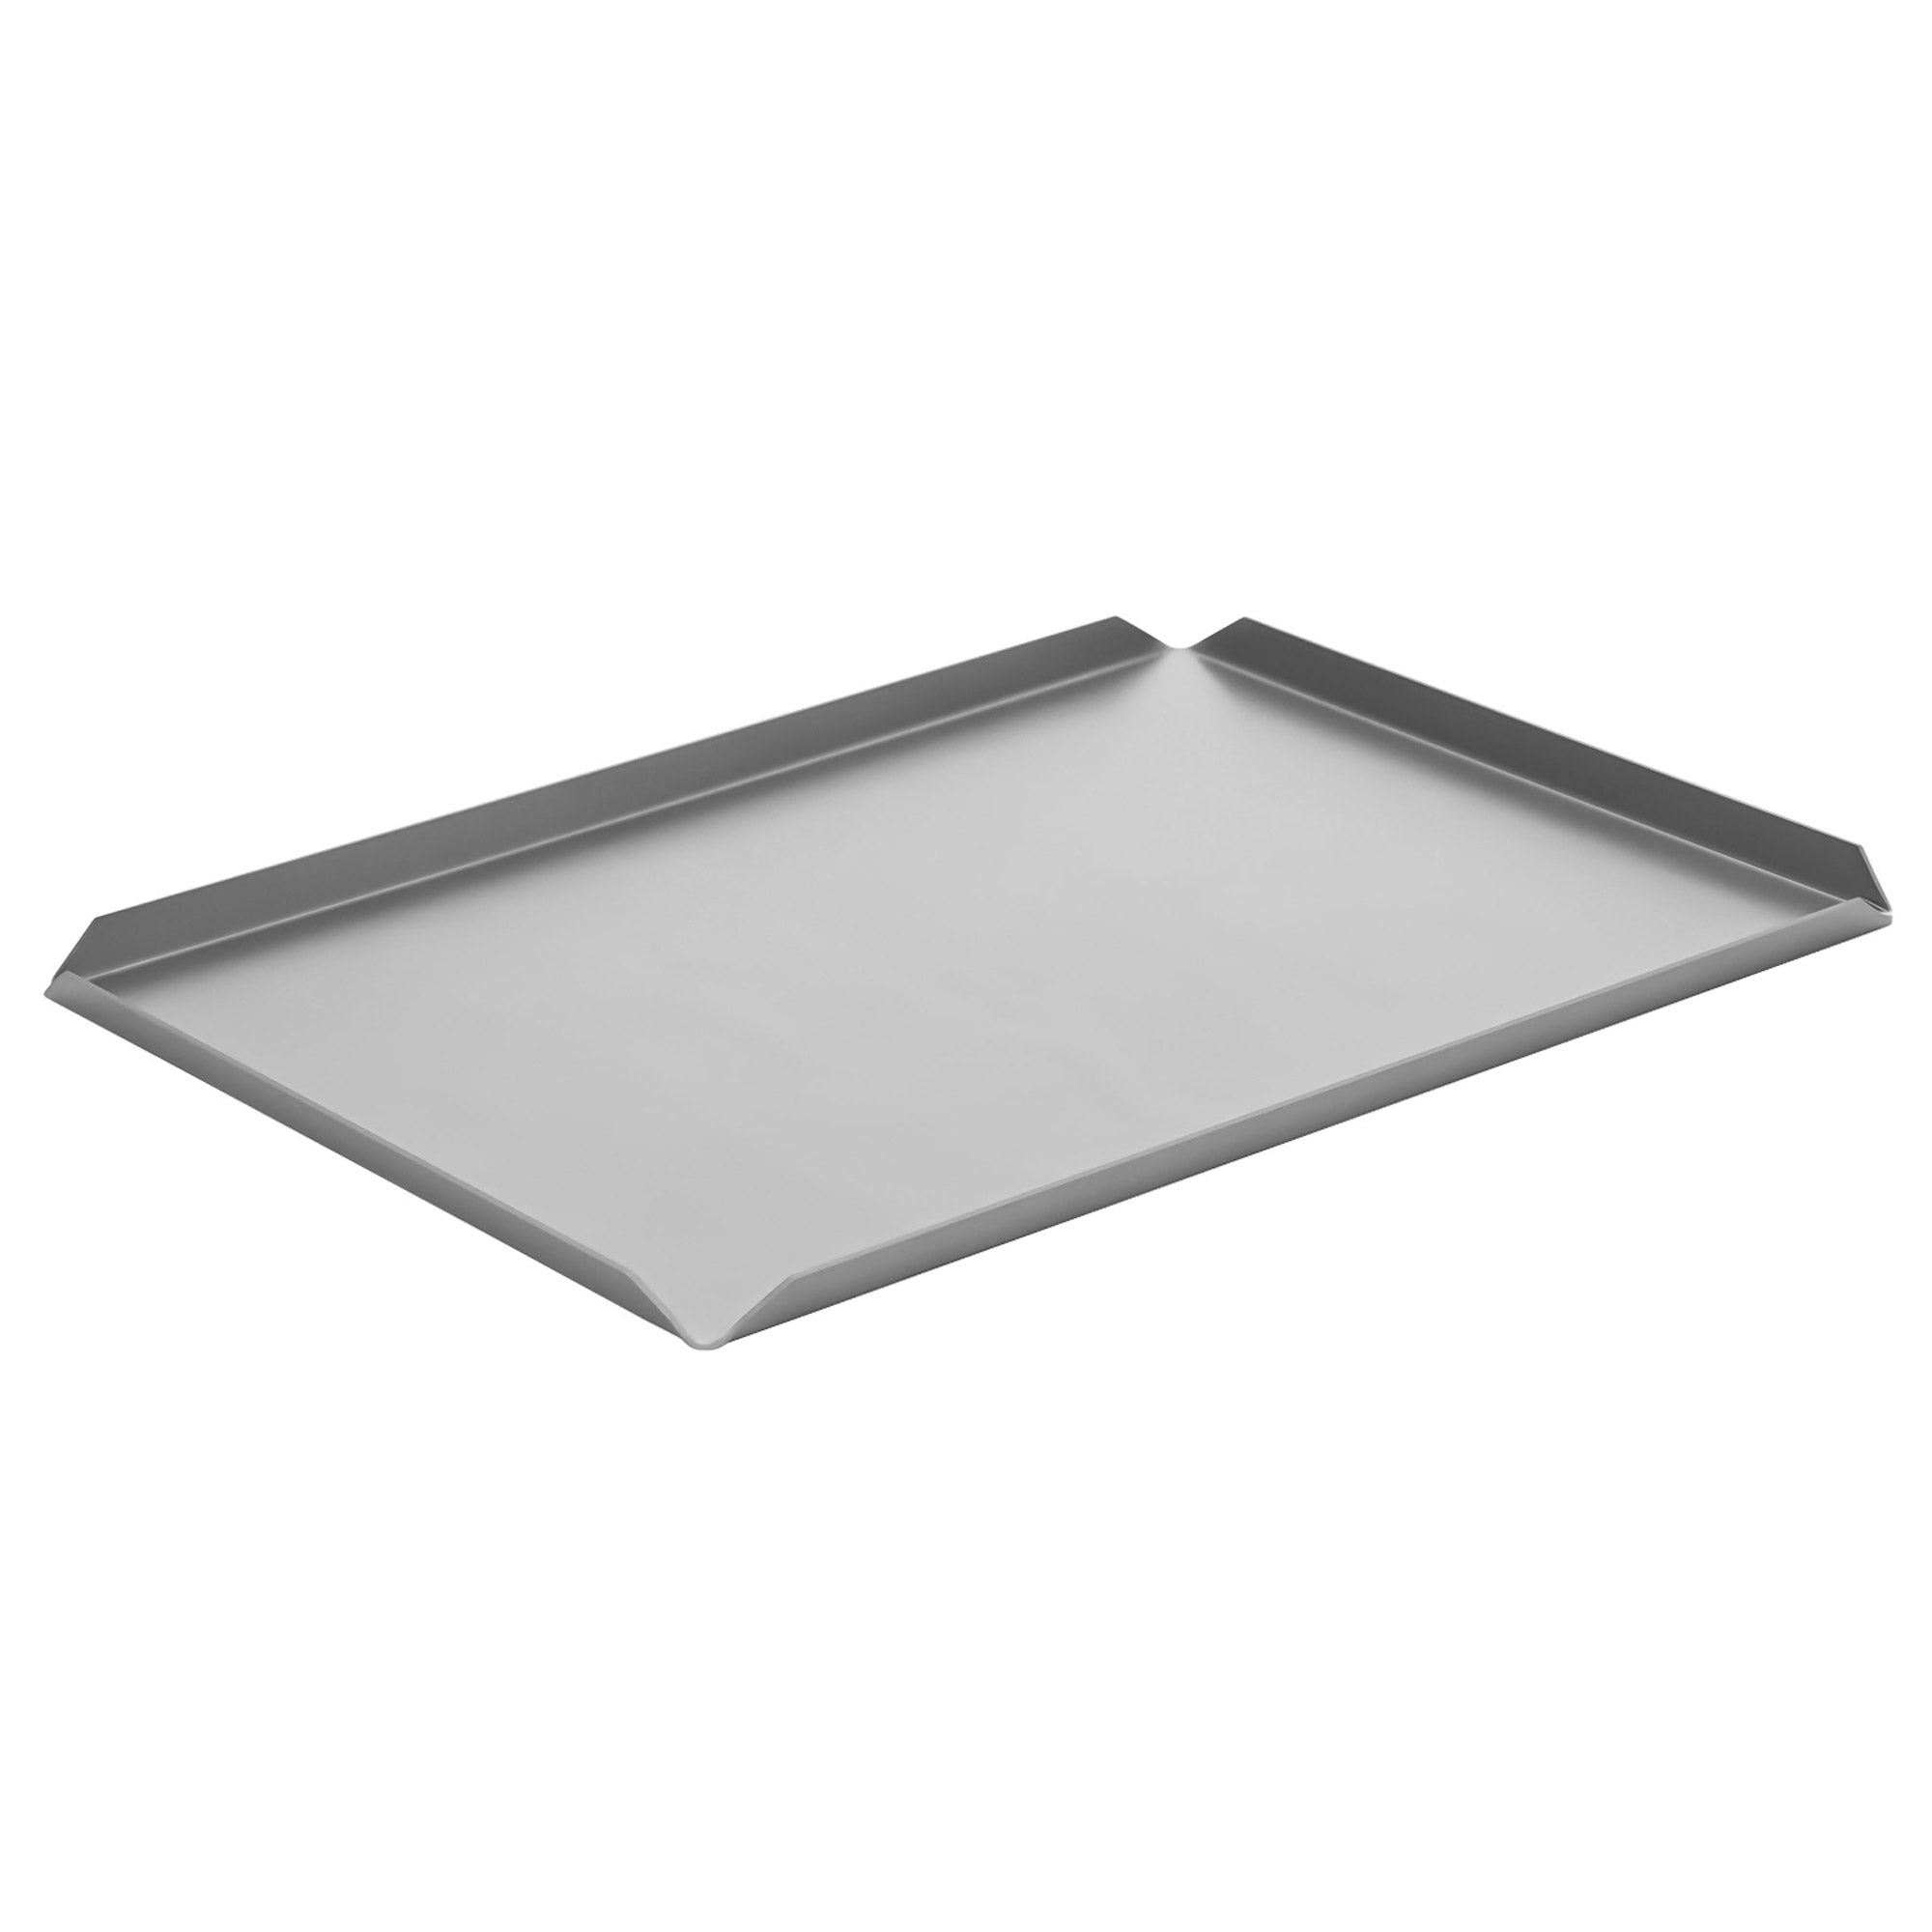 (5 броя) Алуминиева табела за сладкарски изделия и презентации - 400 x 250 x 10 mm - алуминий